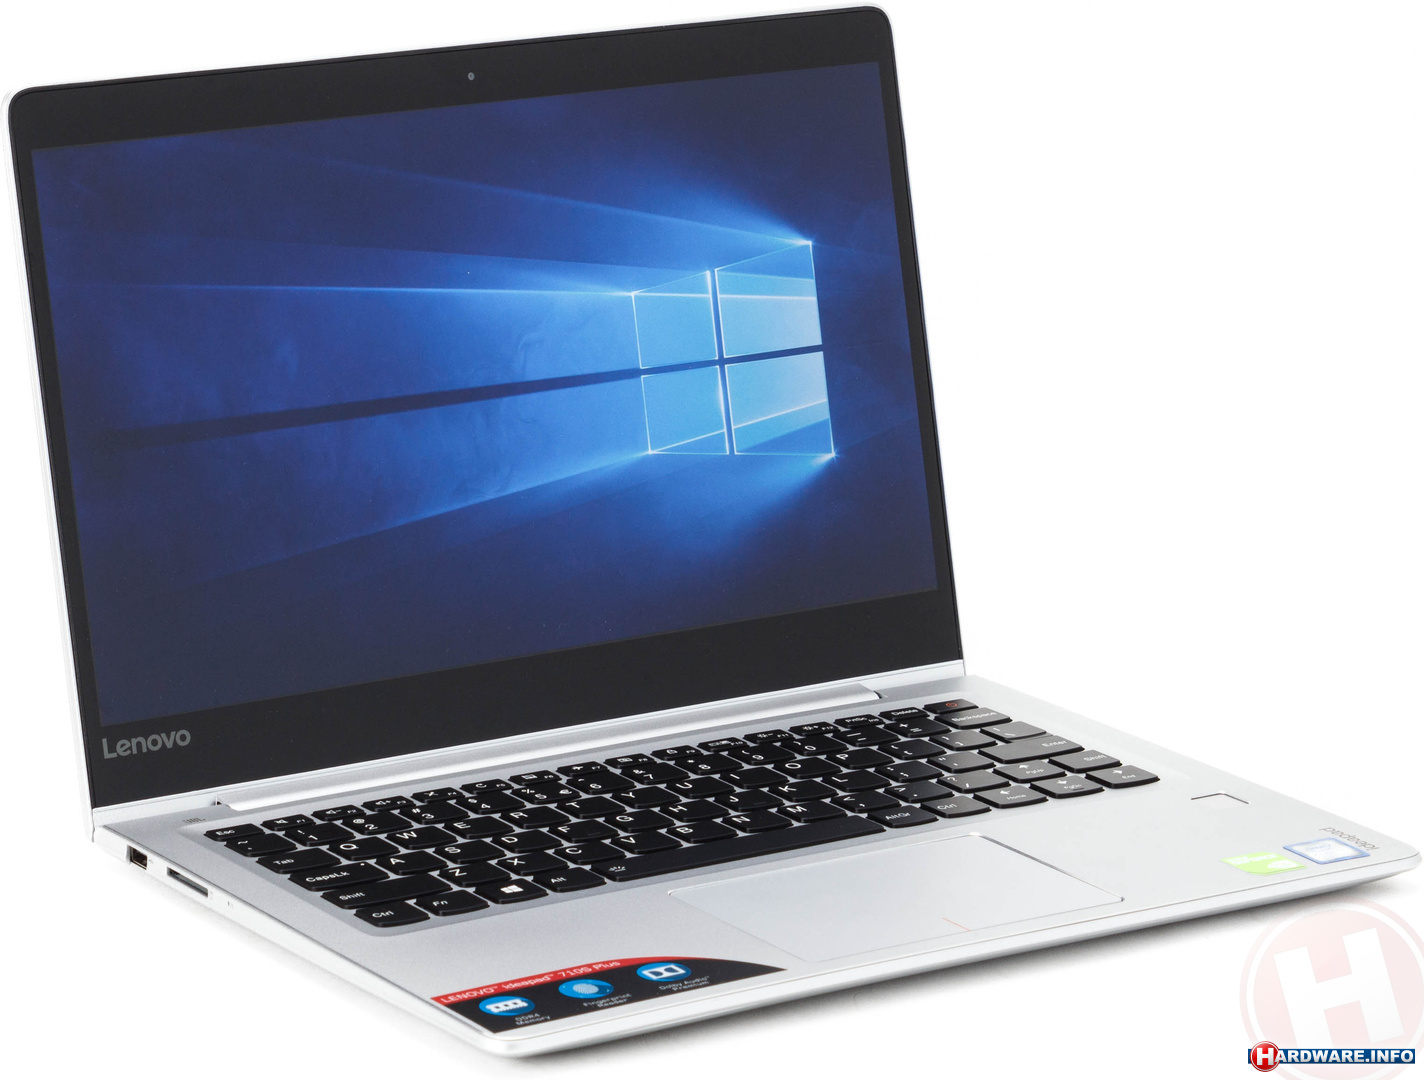 Lenovo IdeaPad 710S-13IKB (80W30059MH) laptop - Hardware Info